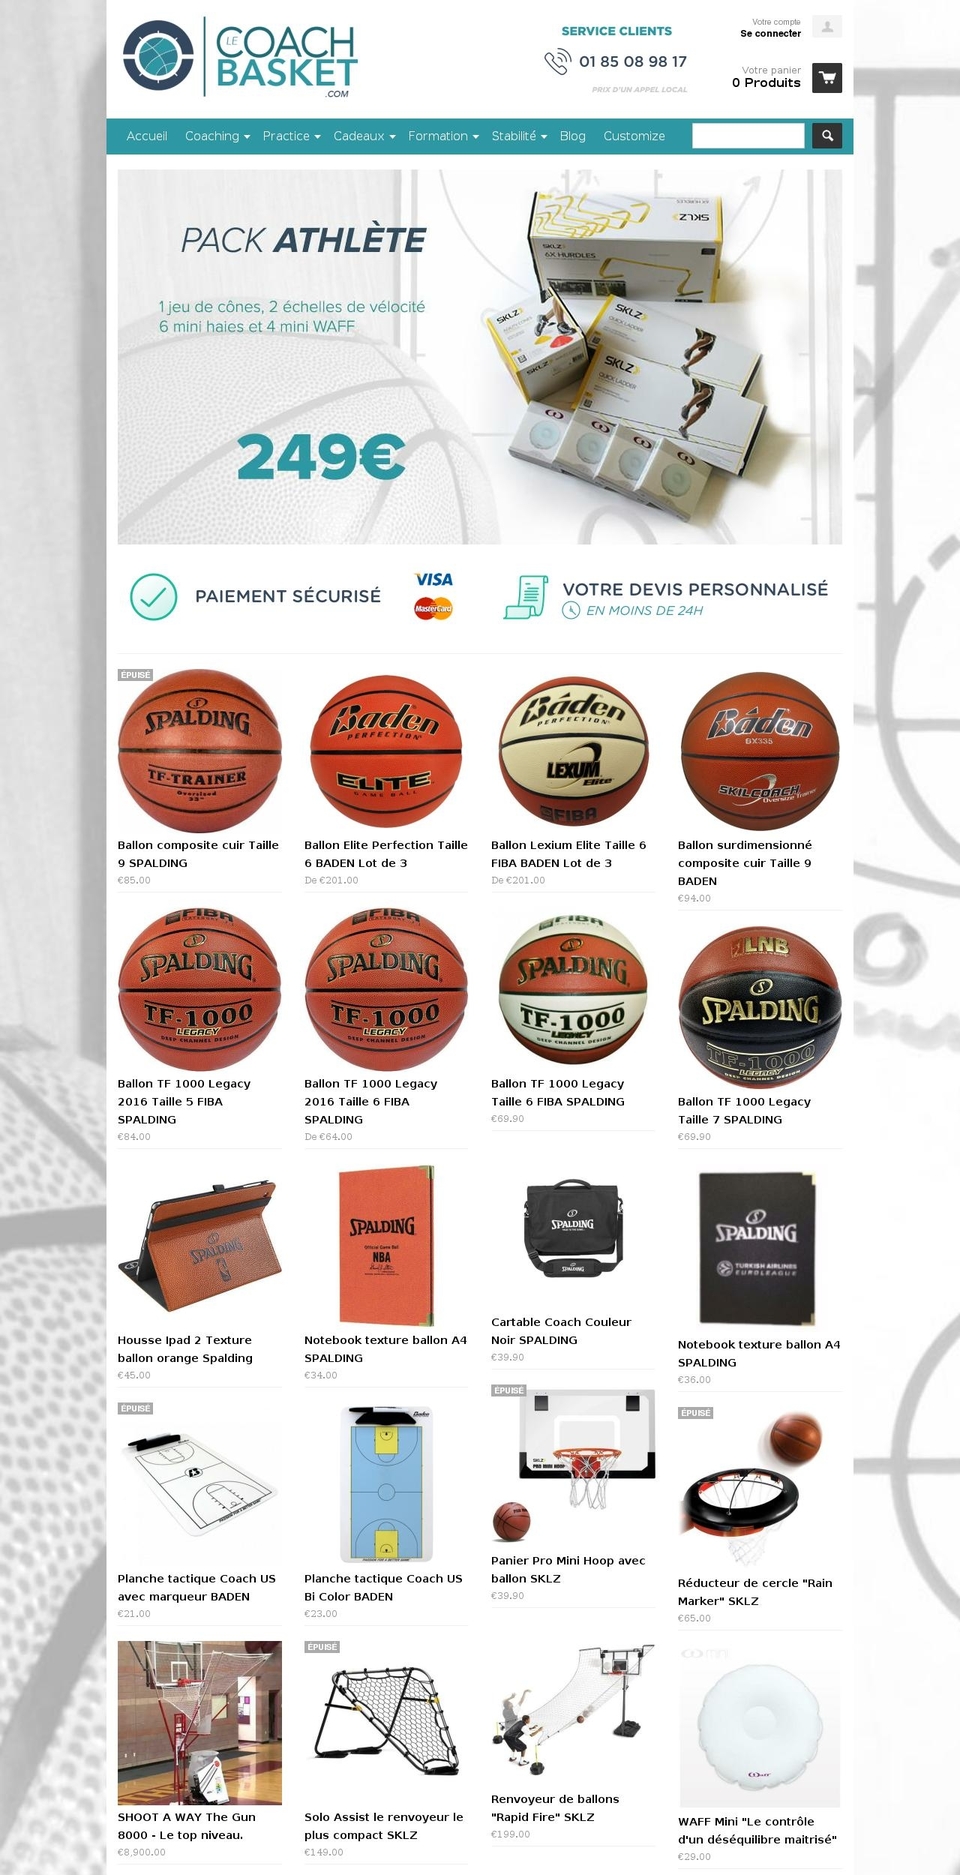 lecoachbasket.com shopify website screenshot